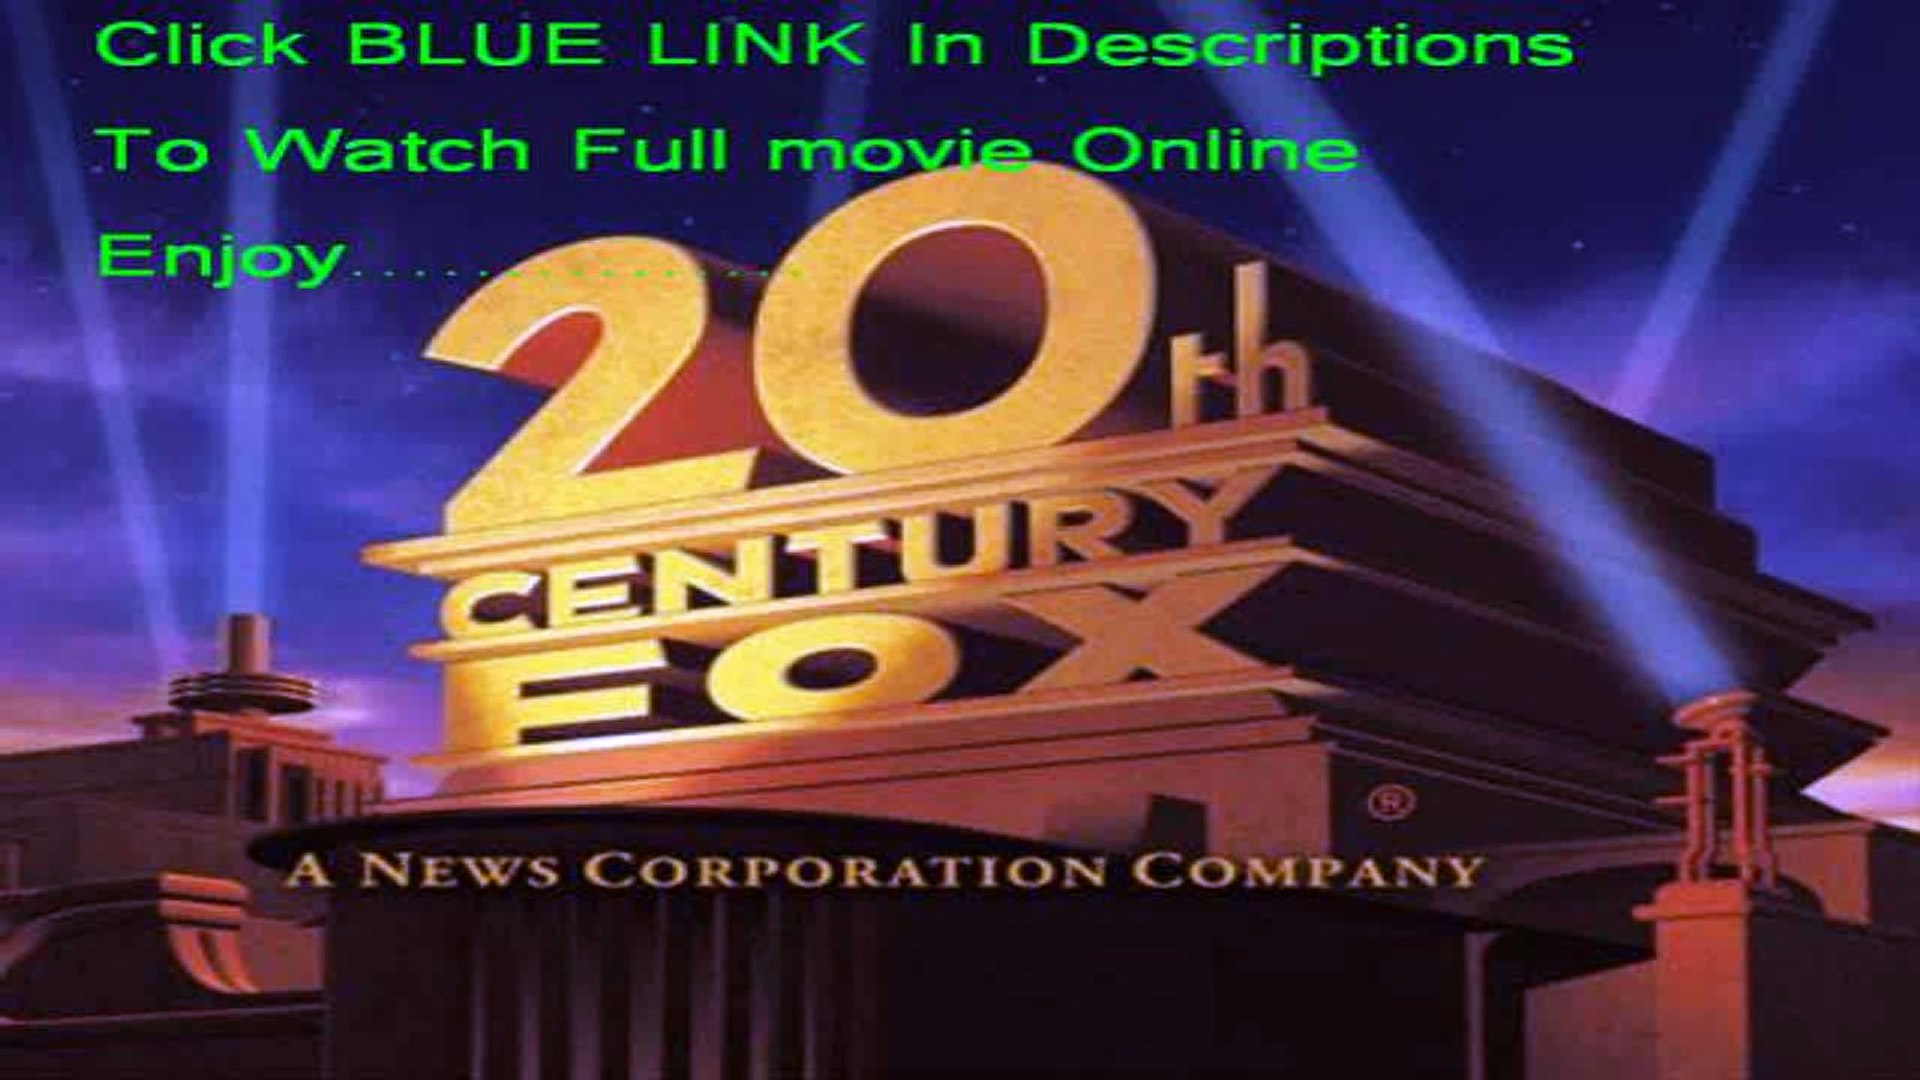 Fox home entertainment. 20 Rh Century Fox Home Entertainment. 20 Центури Фокс логотип 1935. 20th Century Fox. 20th Century Fox Home Entertainment 2010.